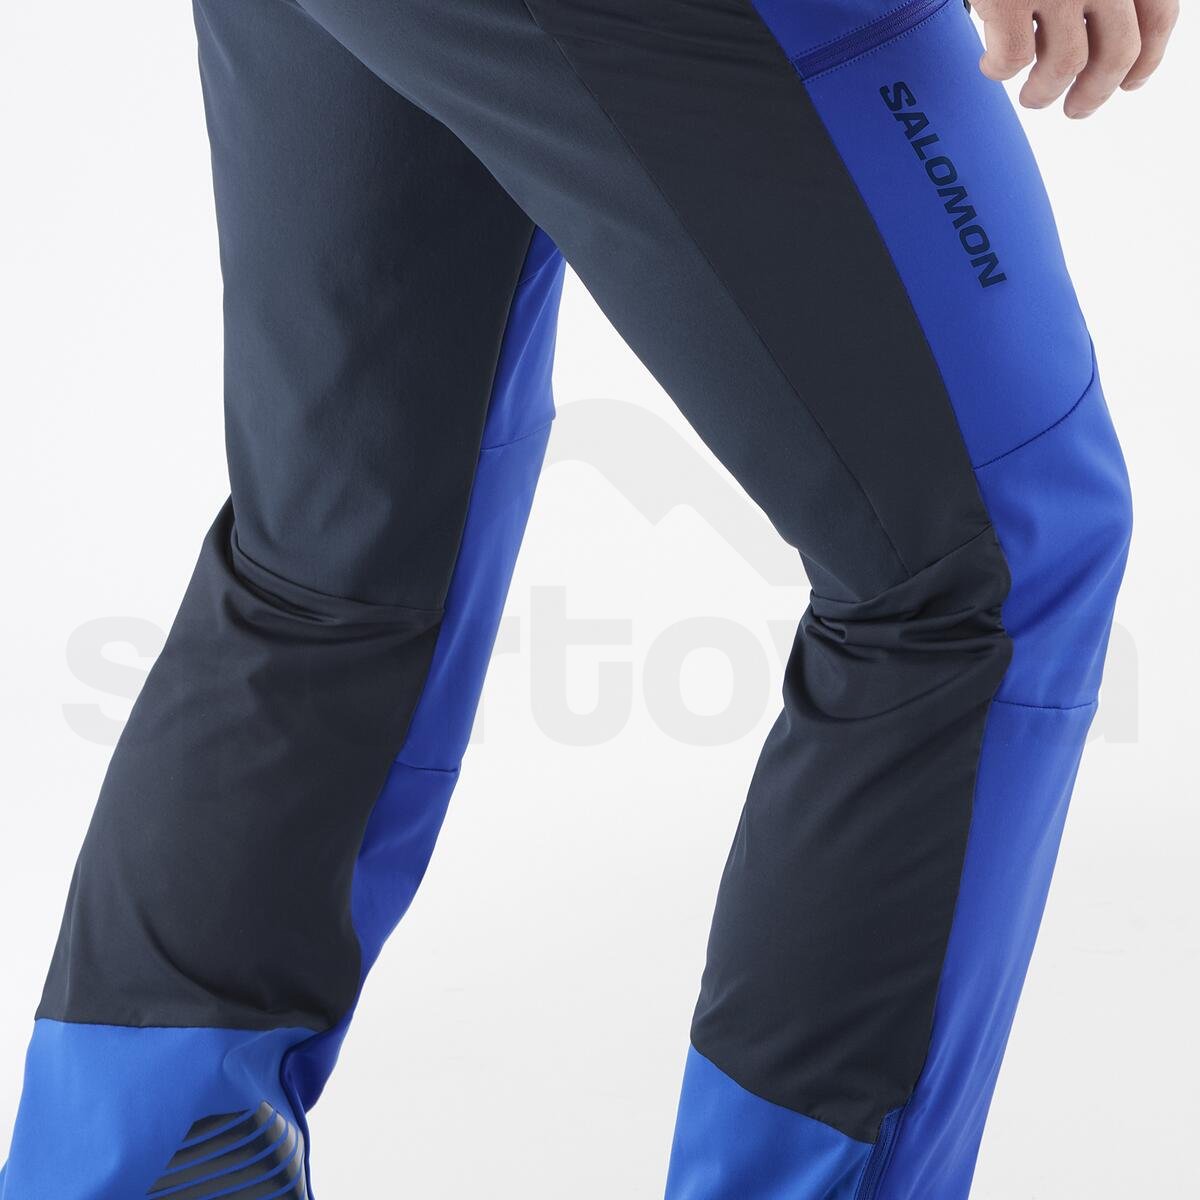 Kalhoty Salomon Mtn Softshell Pant M - modrá/černá